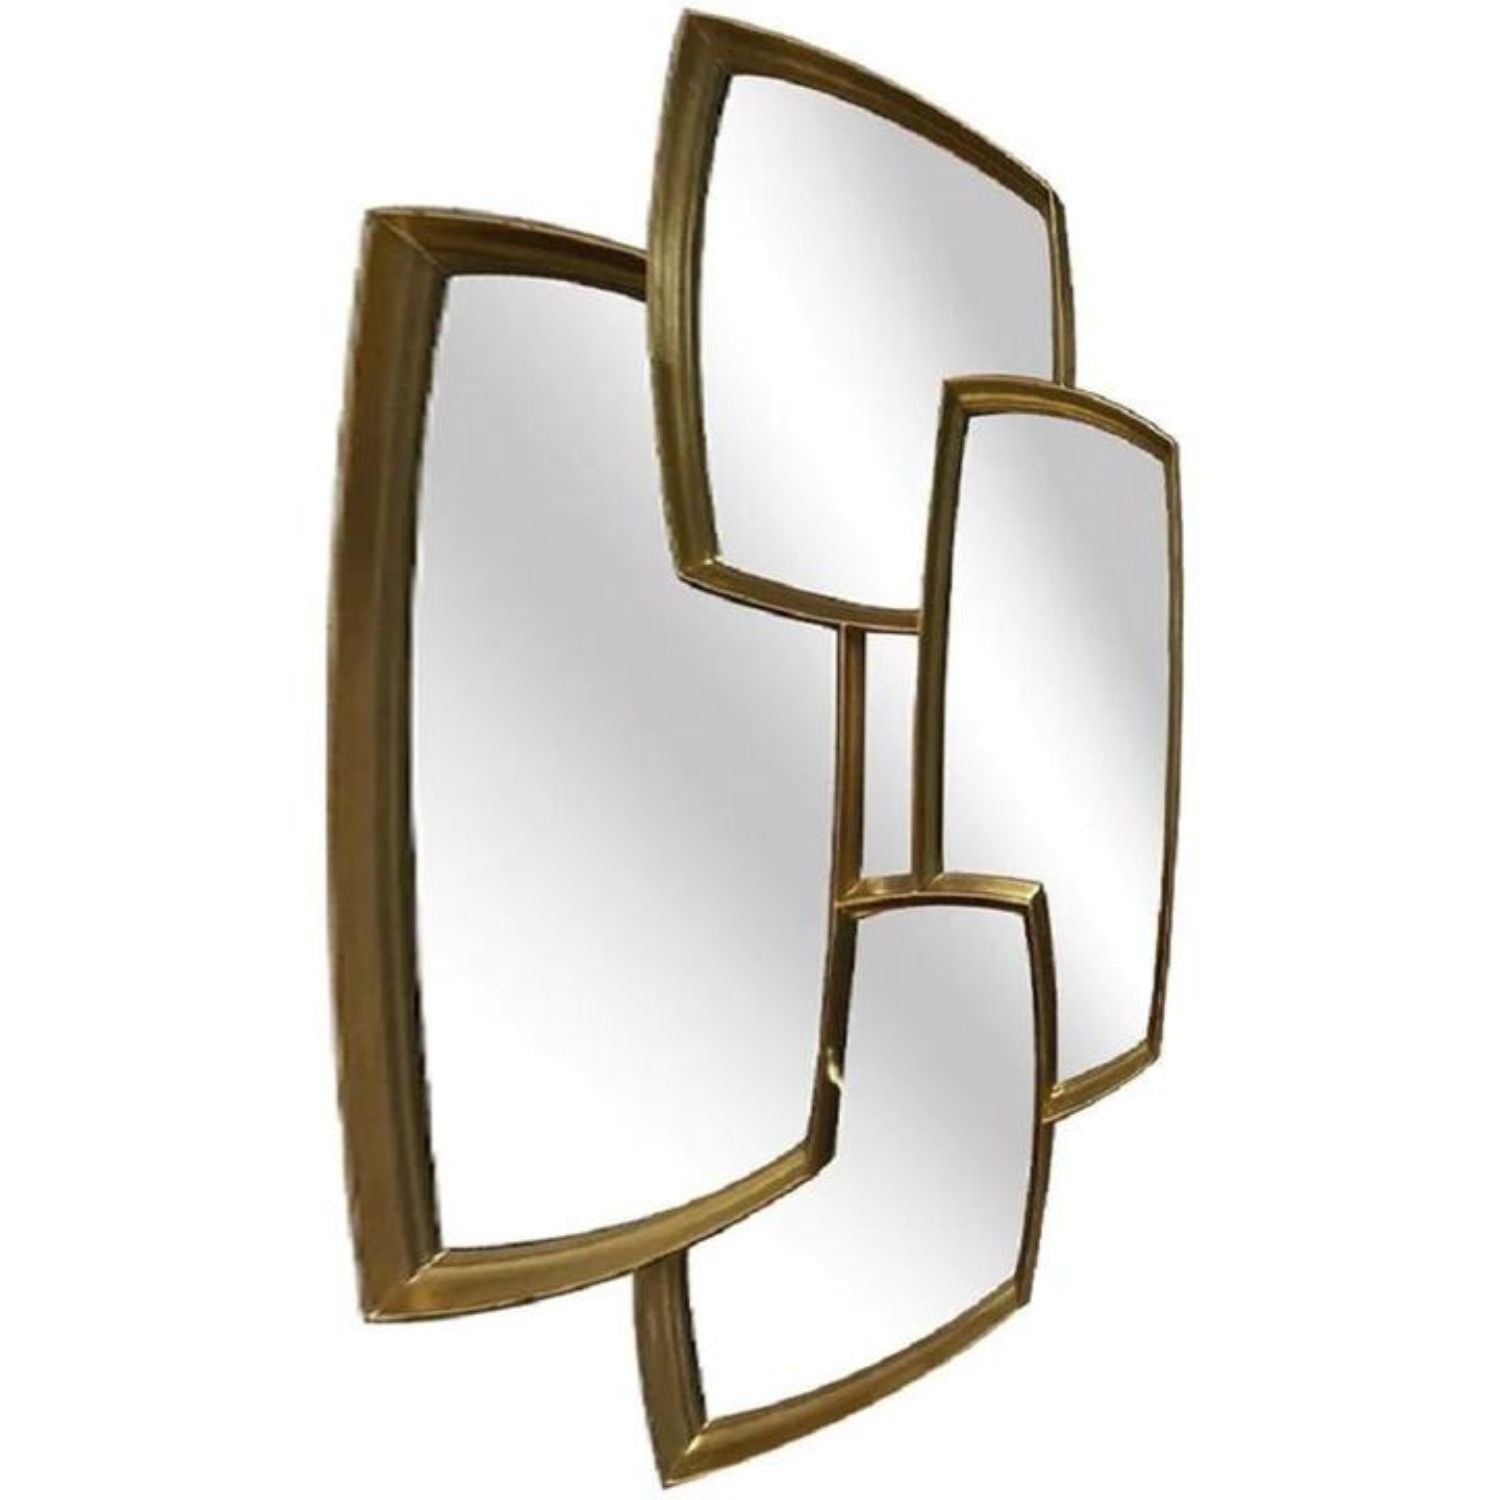 Gold multi paned wall mirror unusual design